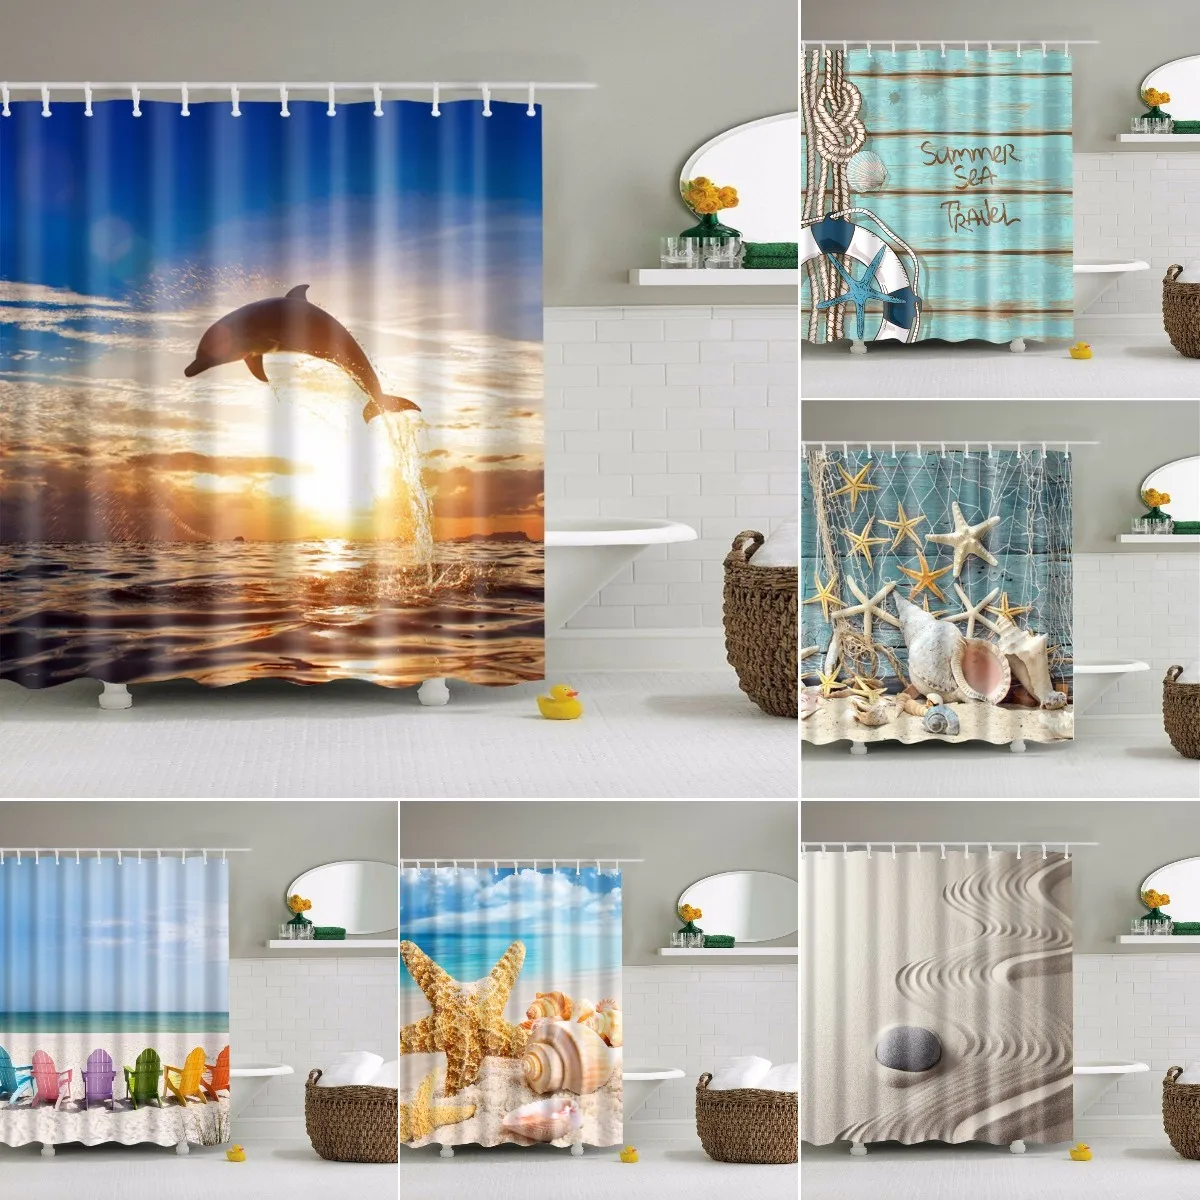 

Seaside Scenic Beach Shells Dolphin Shower Curtain Bathroom Curtain Frabic Waterproof Polyester Bath Curtains for Bathroom